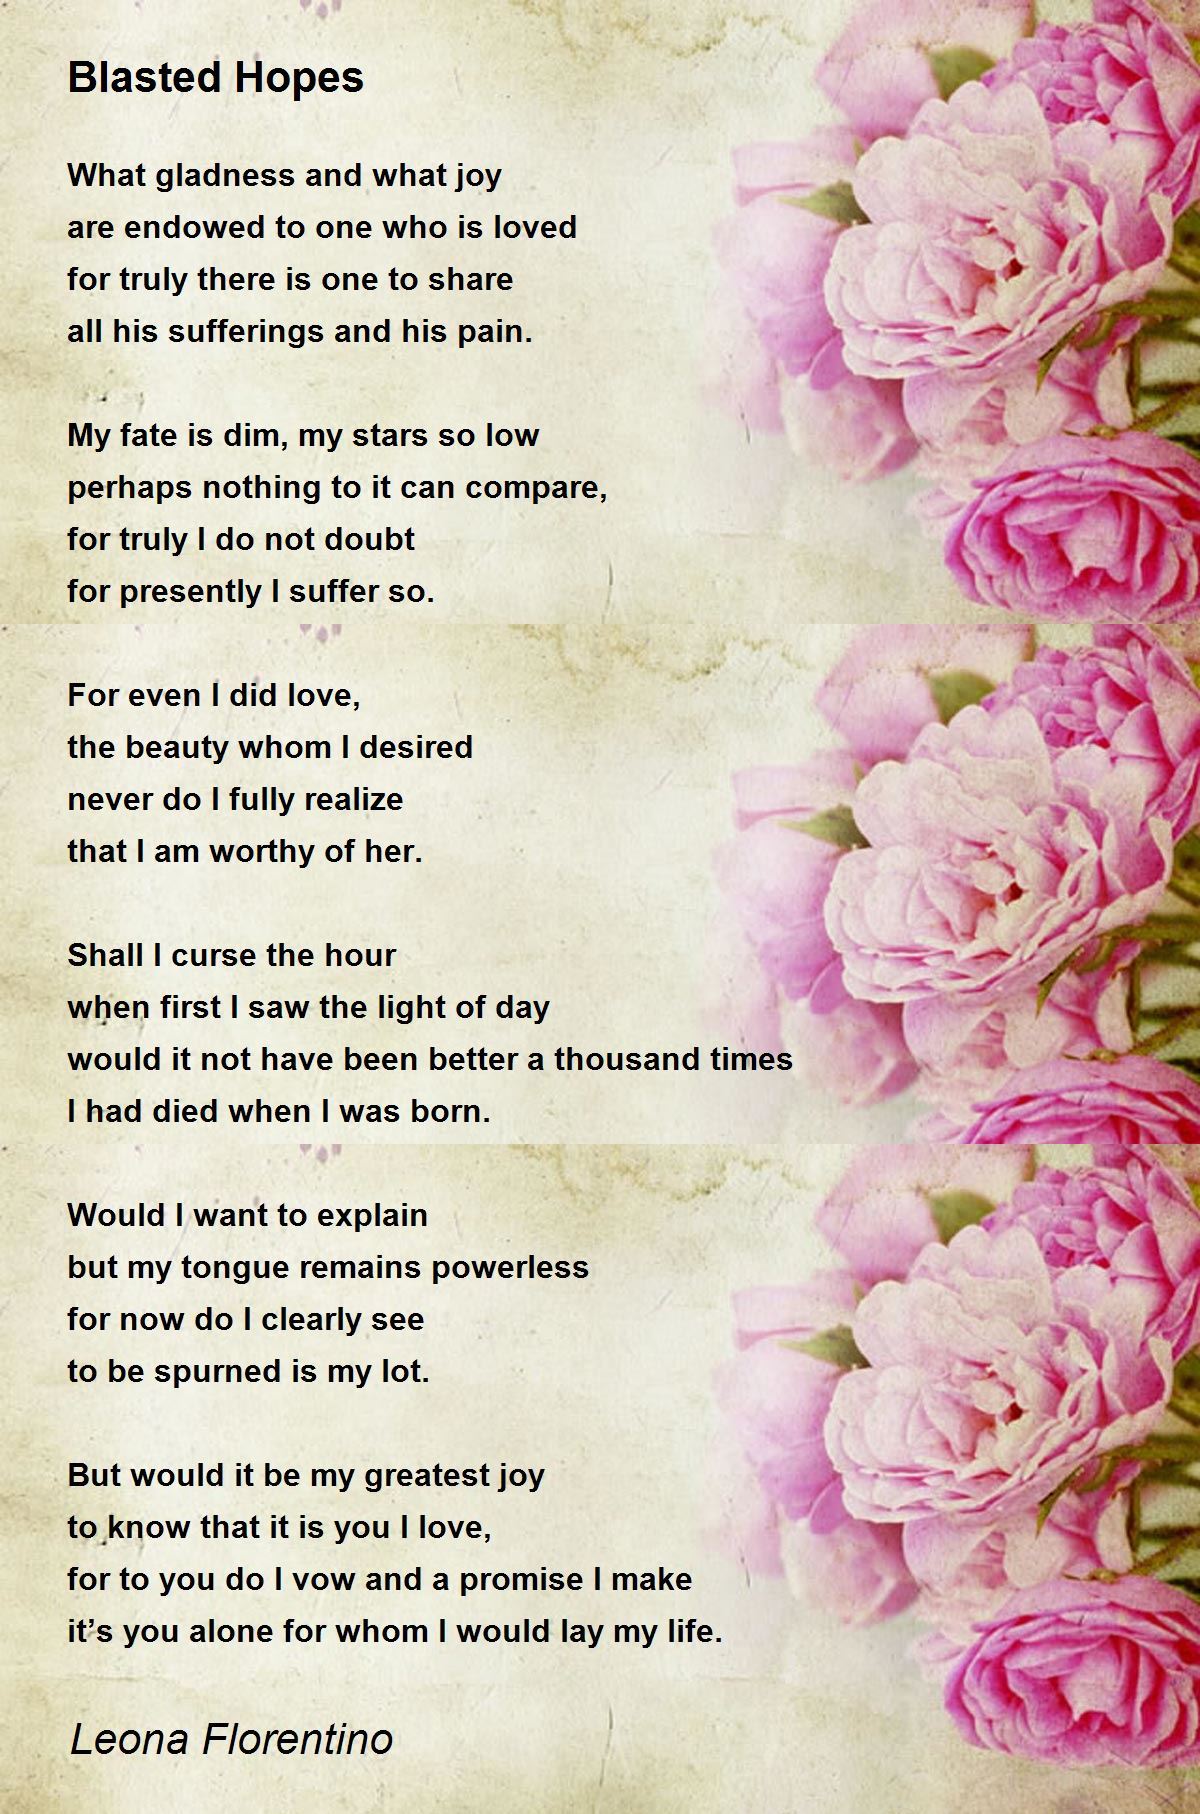 Blasted Hopes - Blasted Hopes Poem by Leona Florentino